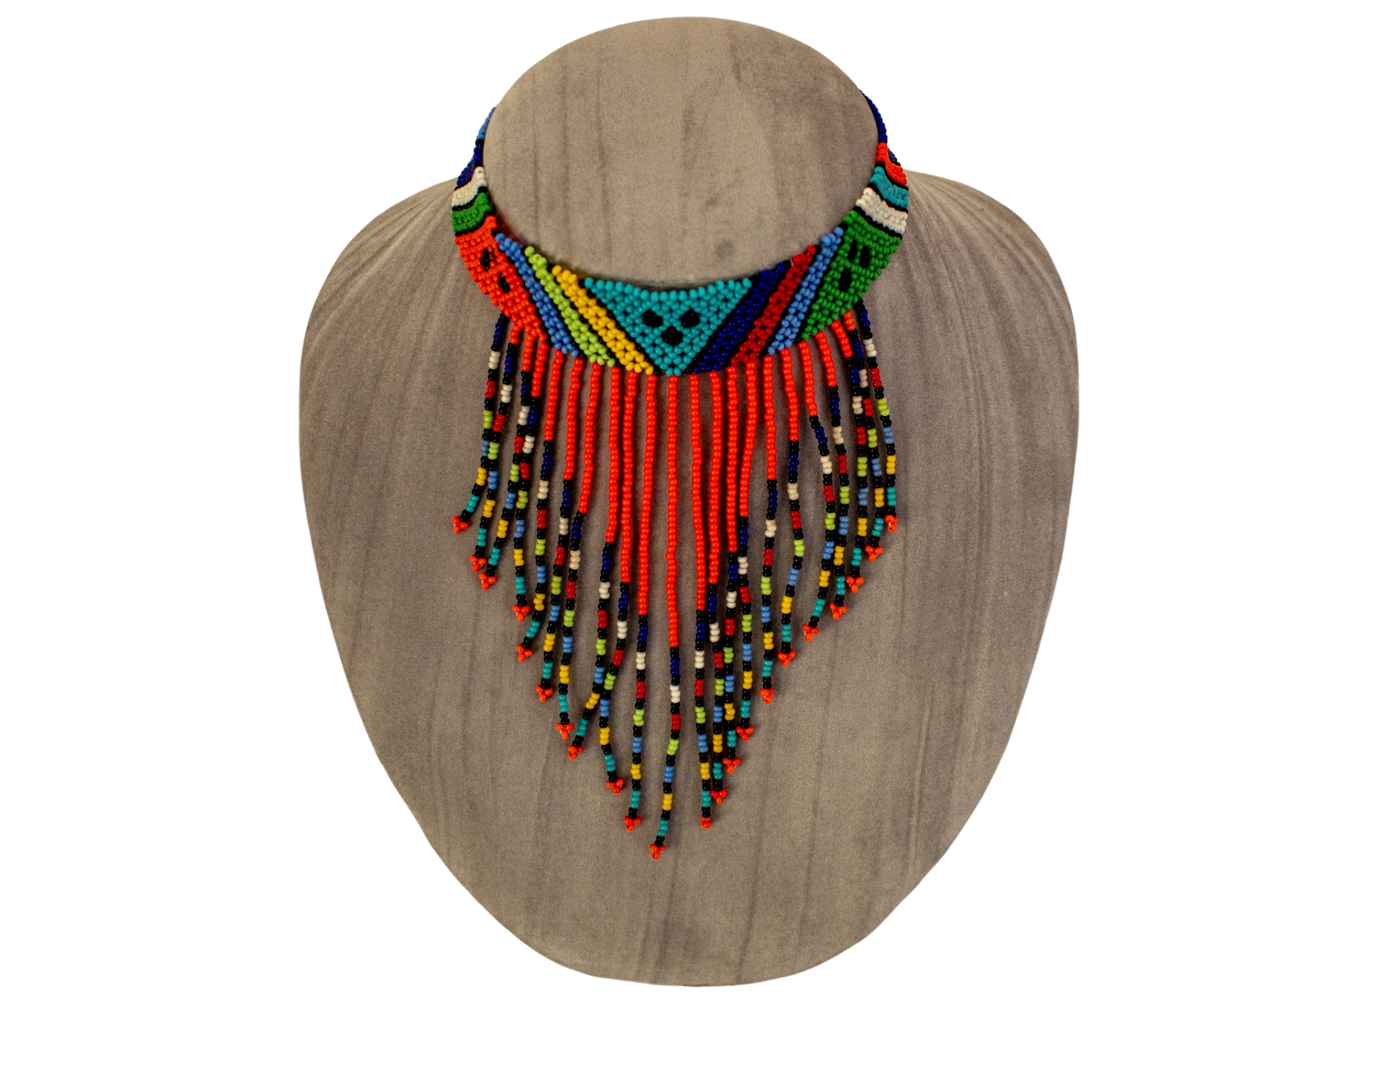 African beaded fringe necklace turquoise